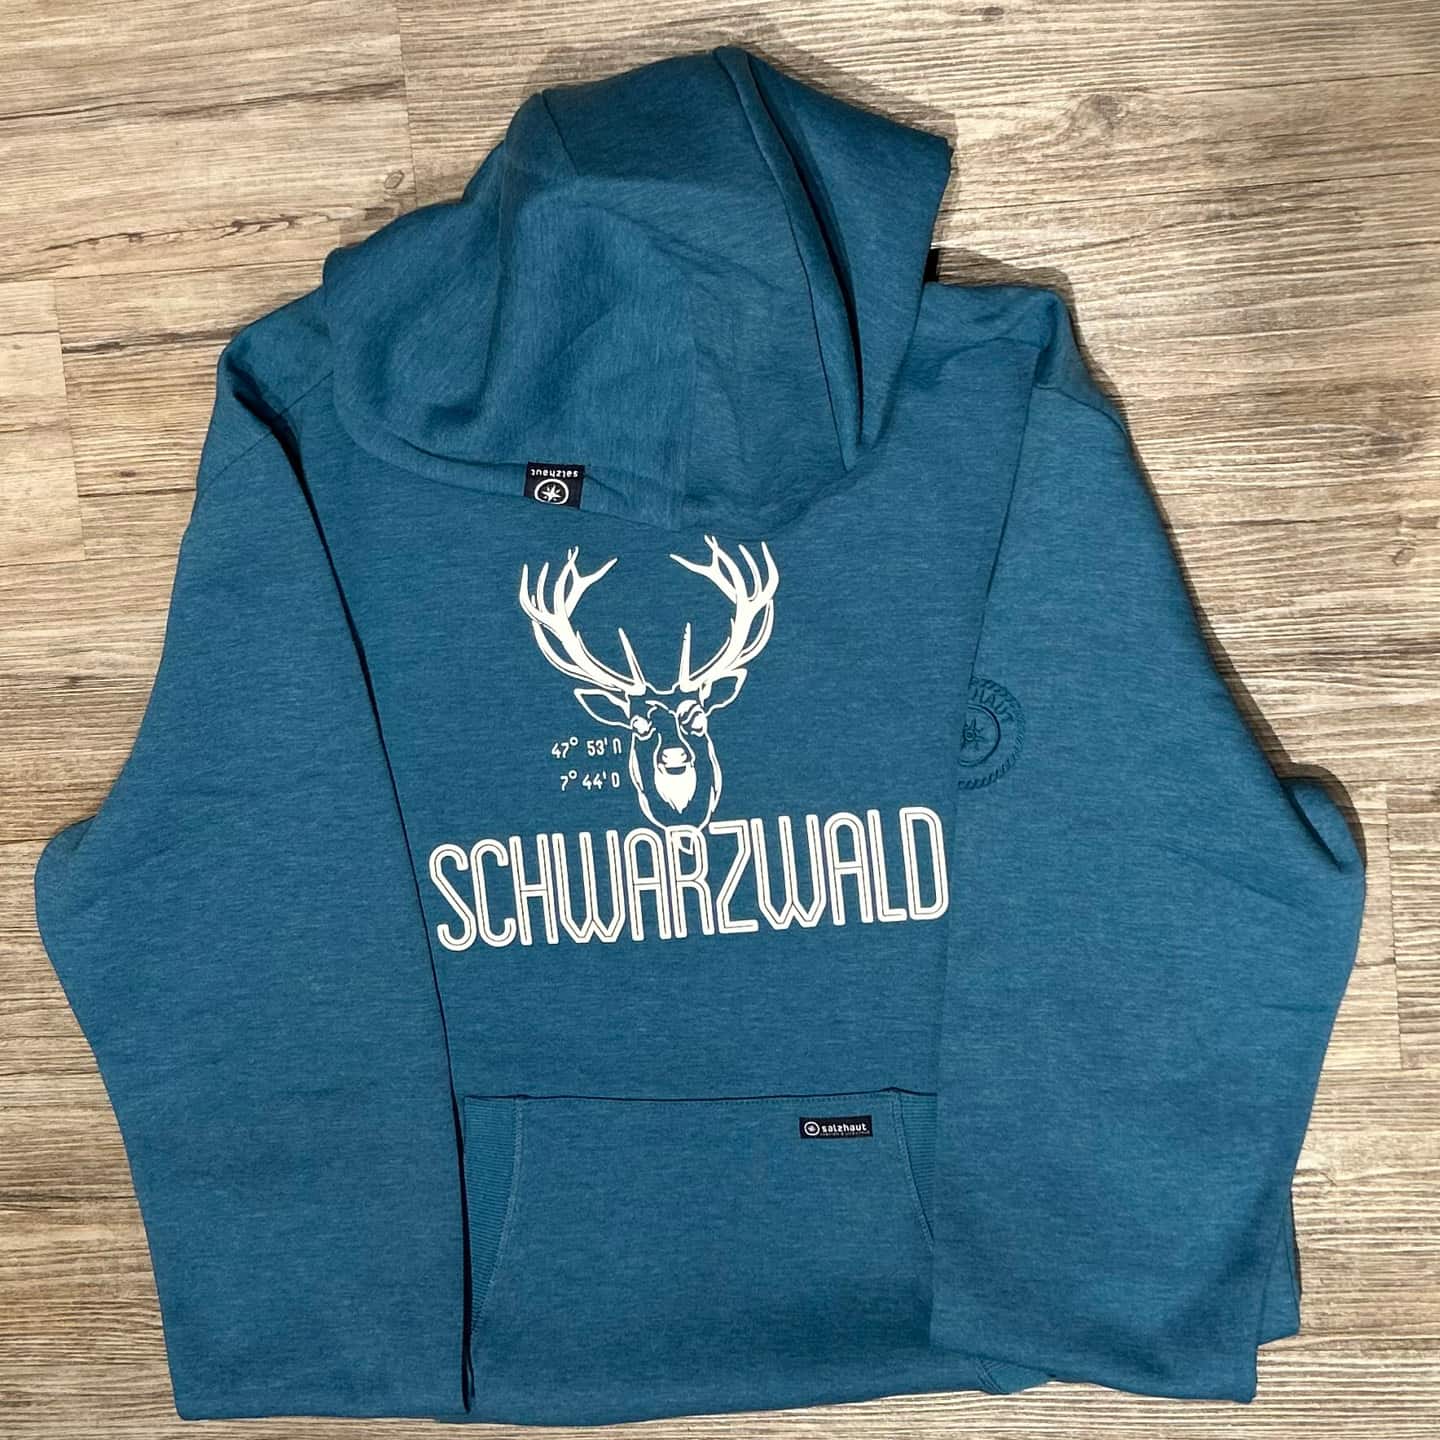 schwarzwald-hoodie-seagport-white